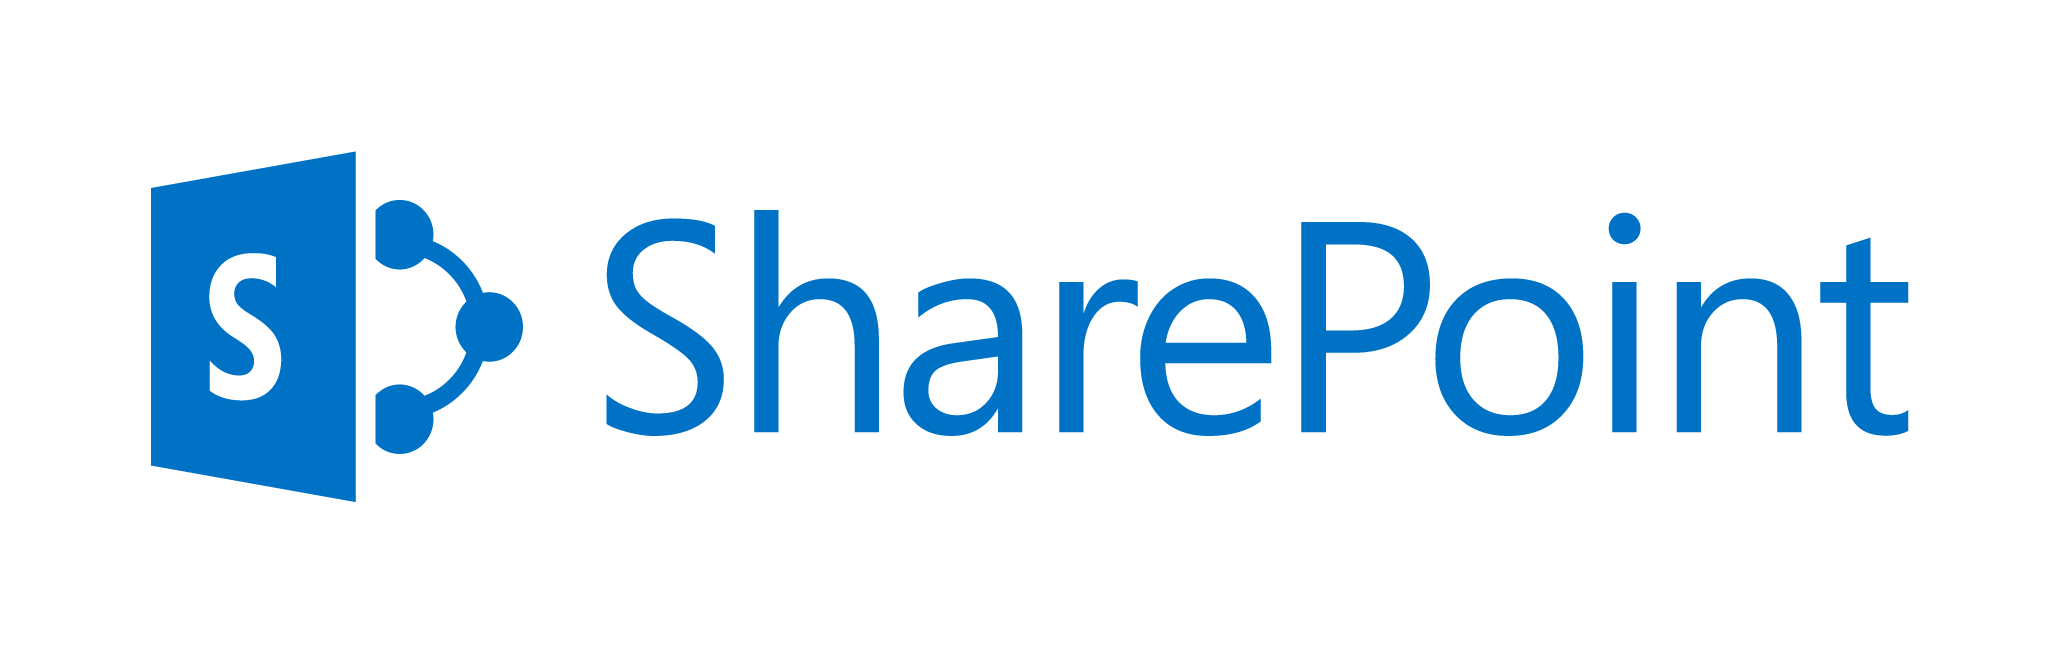 Microsoft Office 365 Sharepoint Logo Logodix